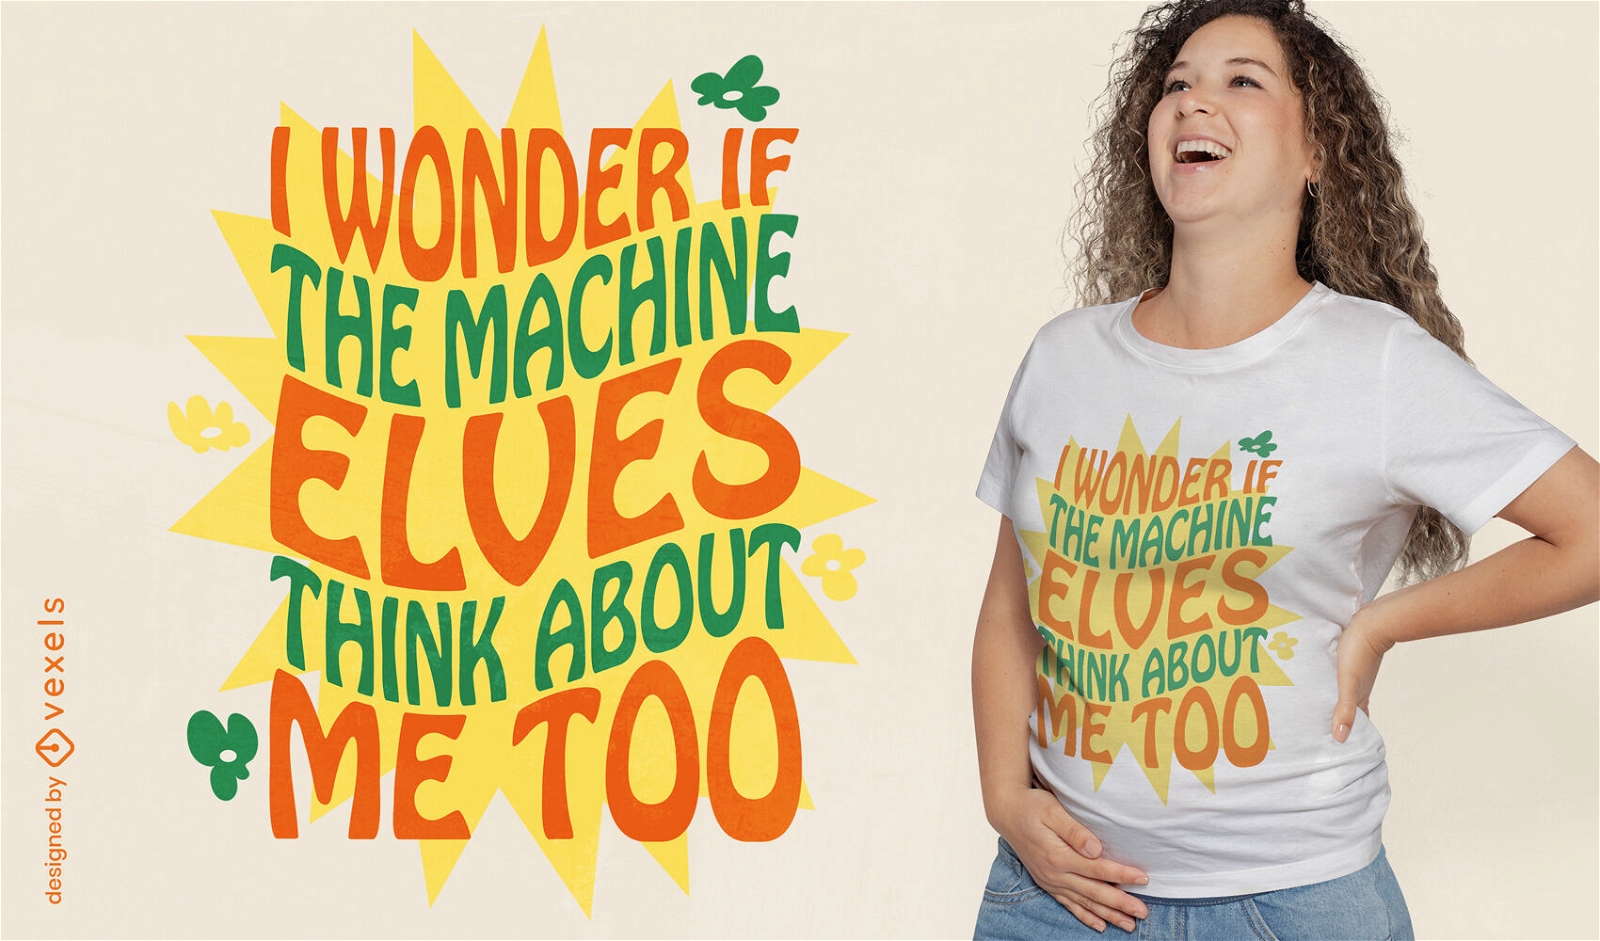 Funny machine elves quote t-shirt design